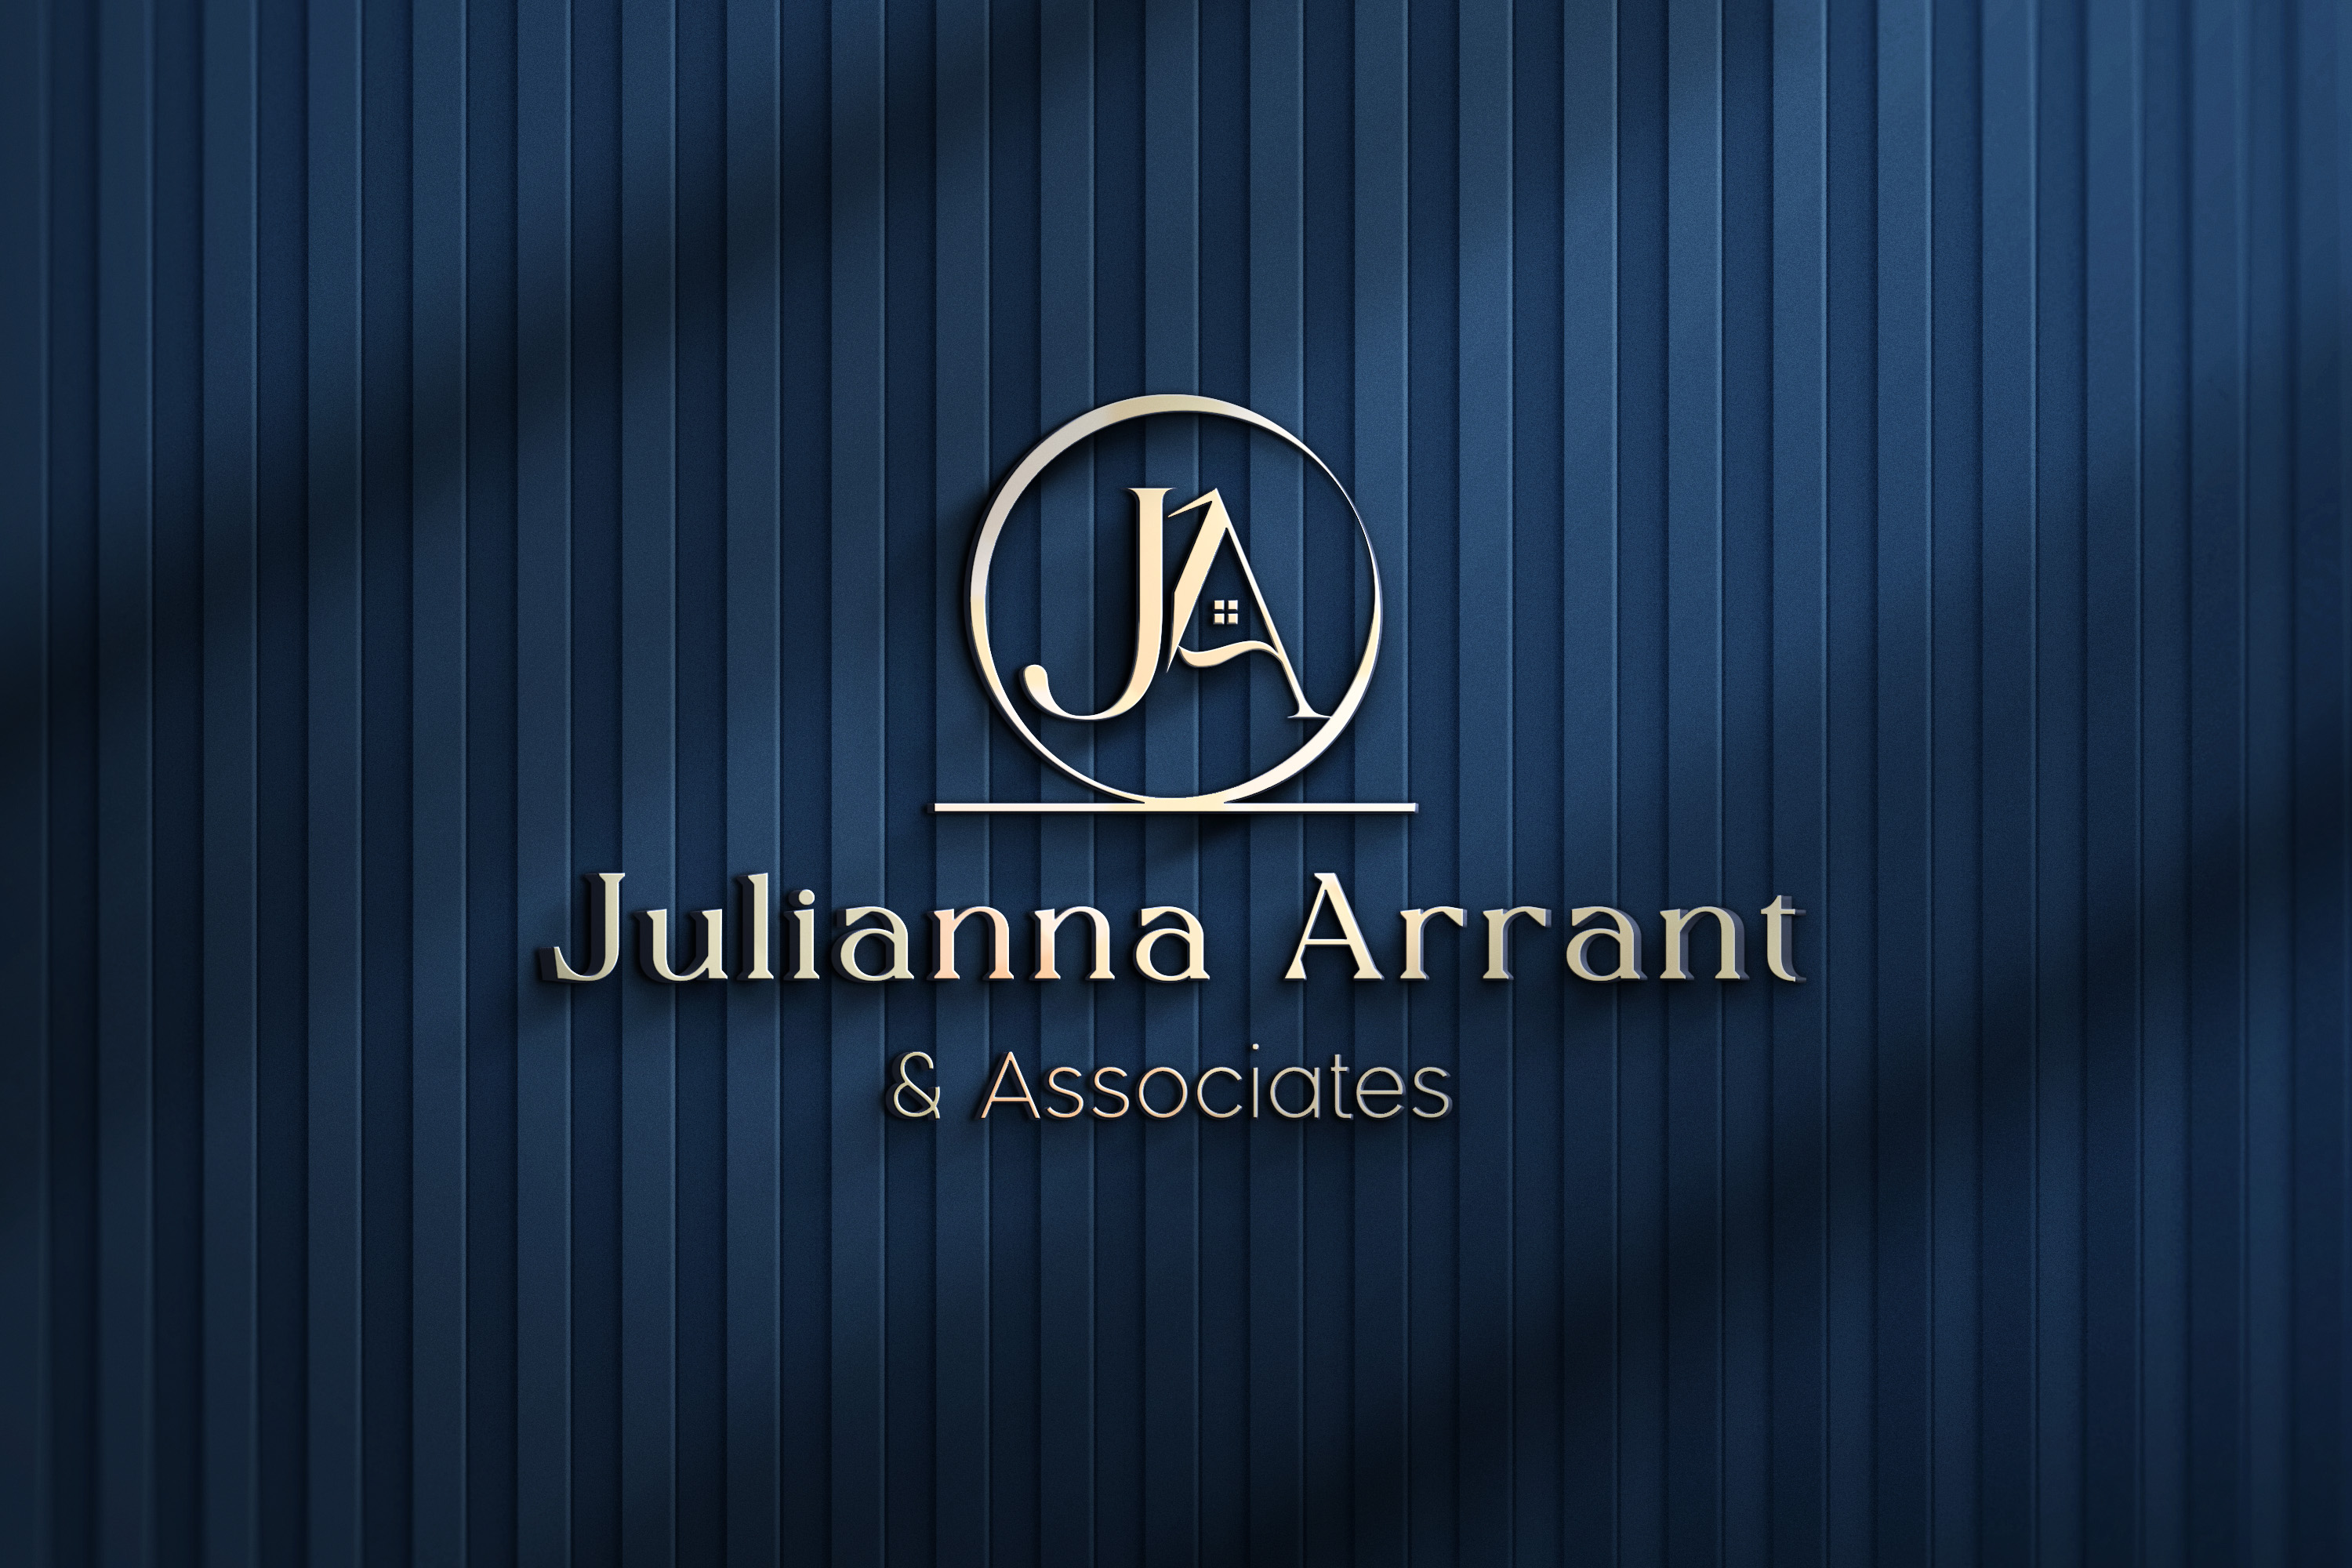 Julianna Arrant & Associates